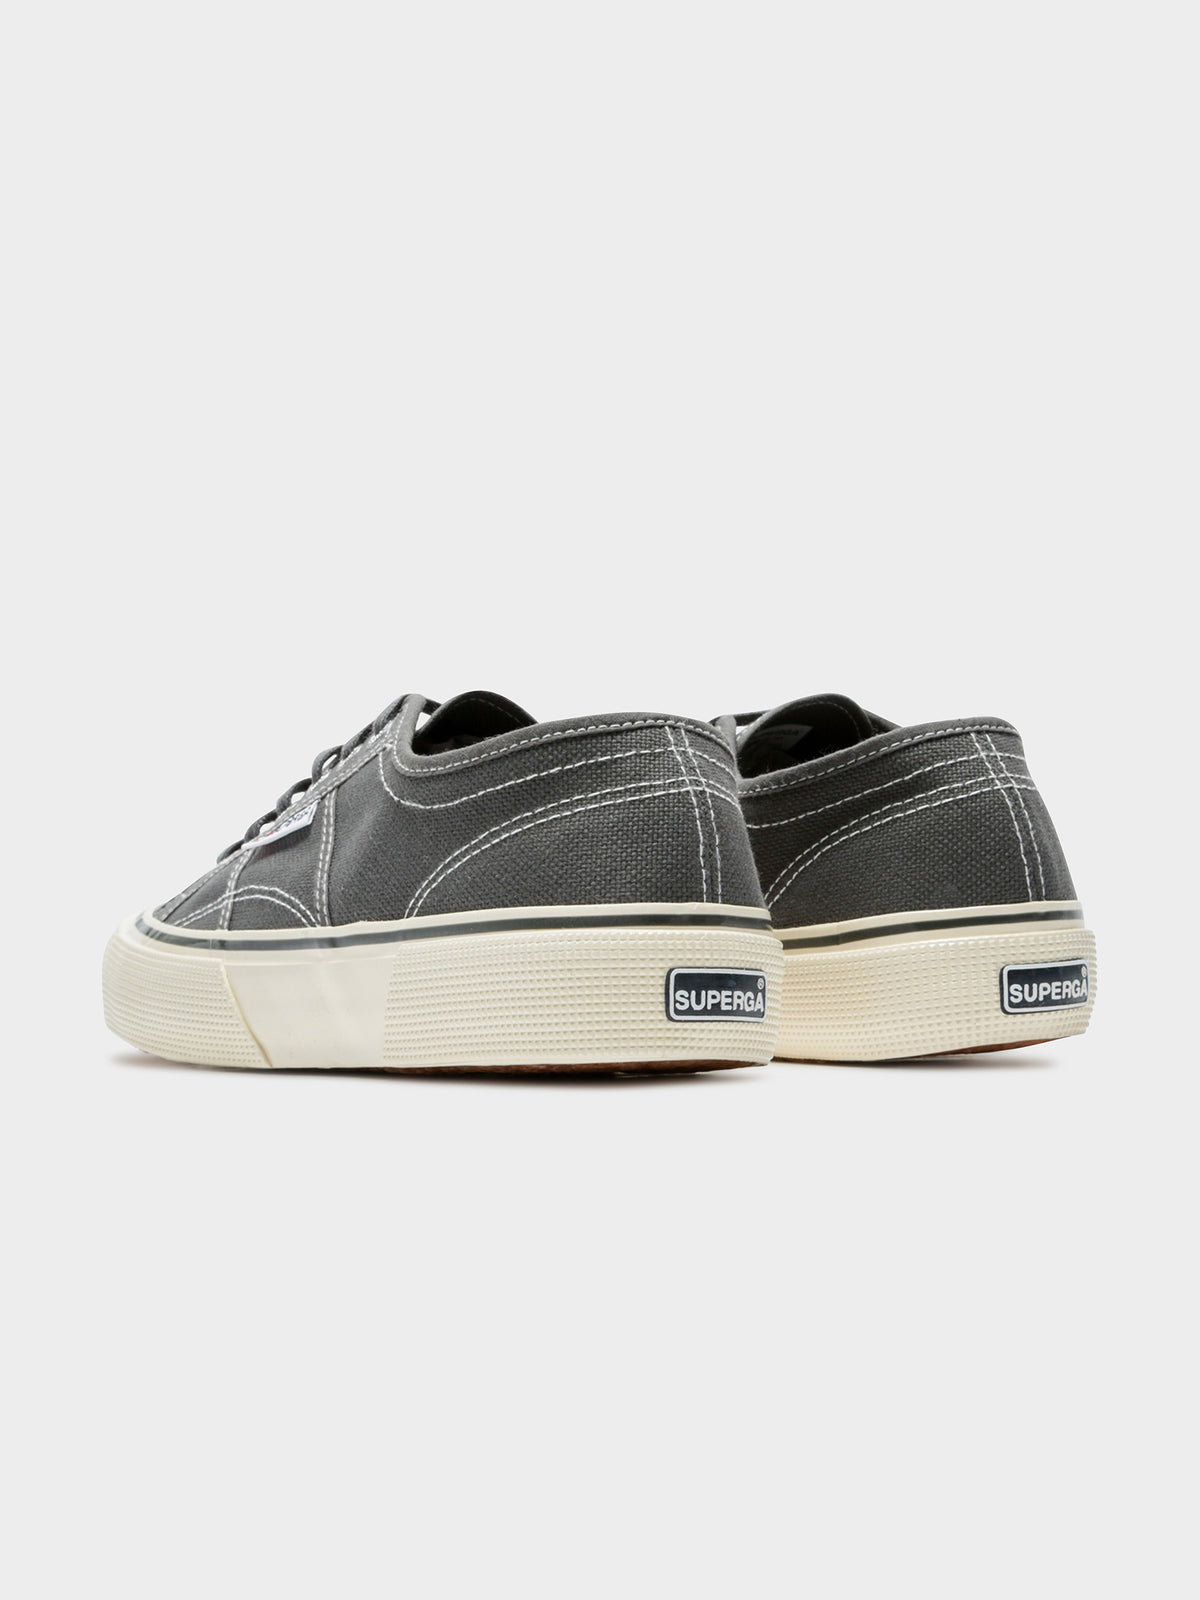 Mens 2490 Cotu Sneakers in Grey Urban